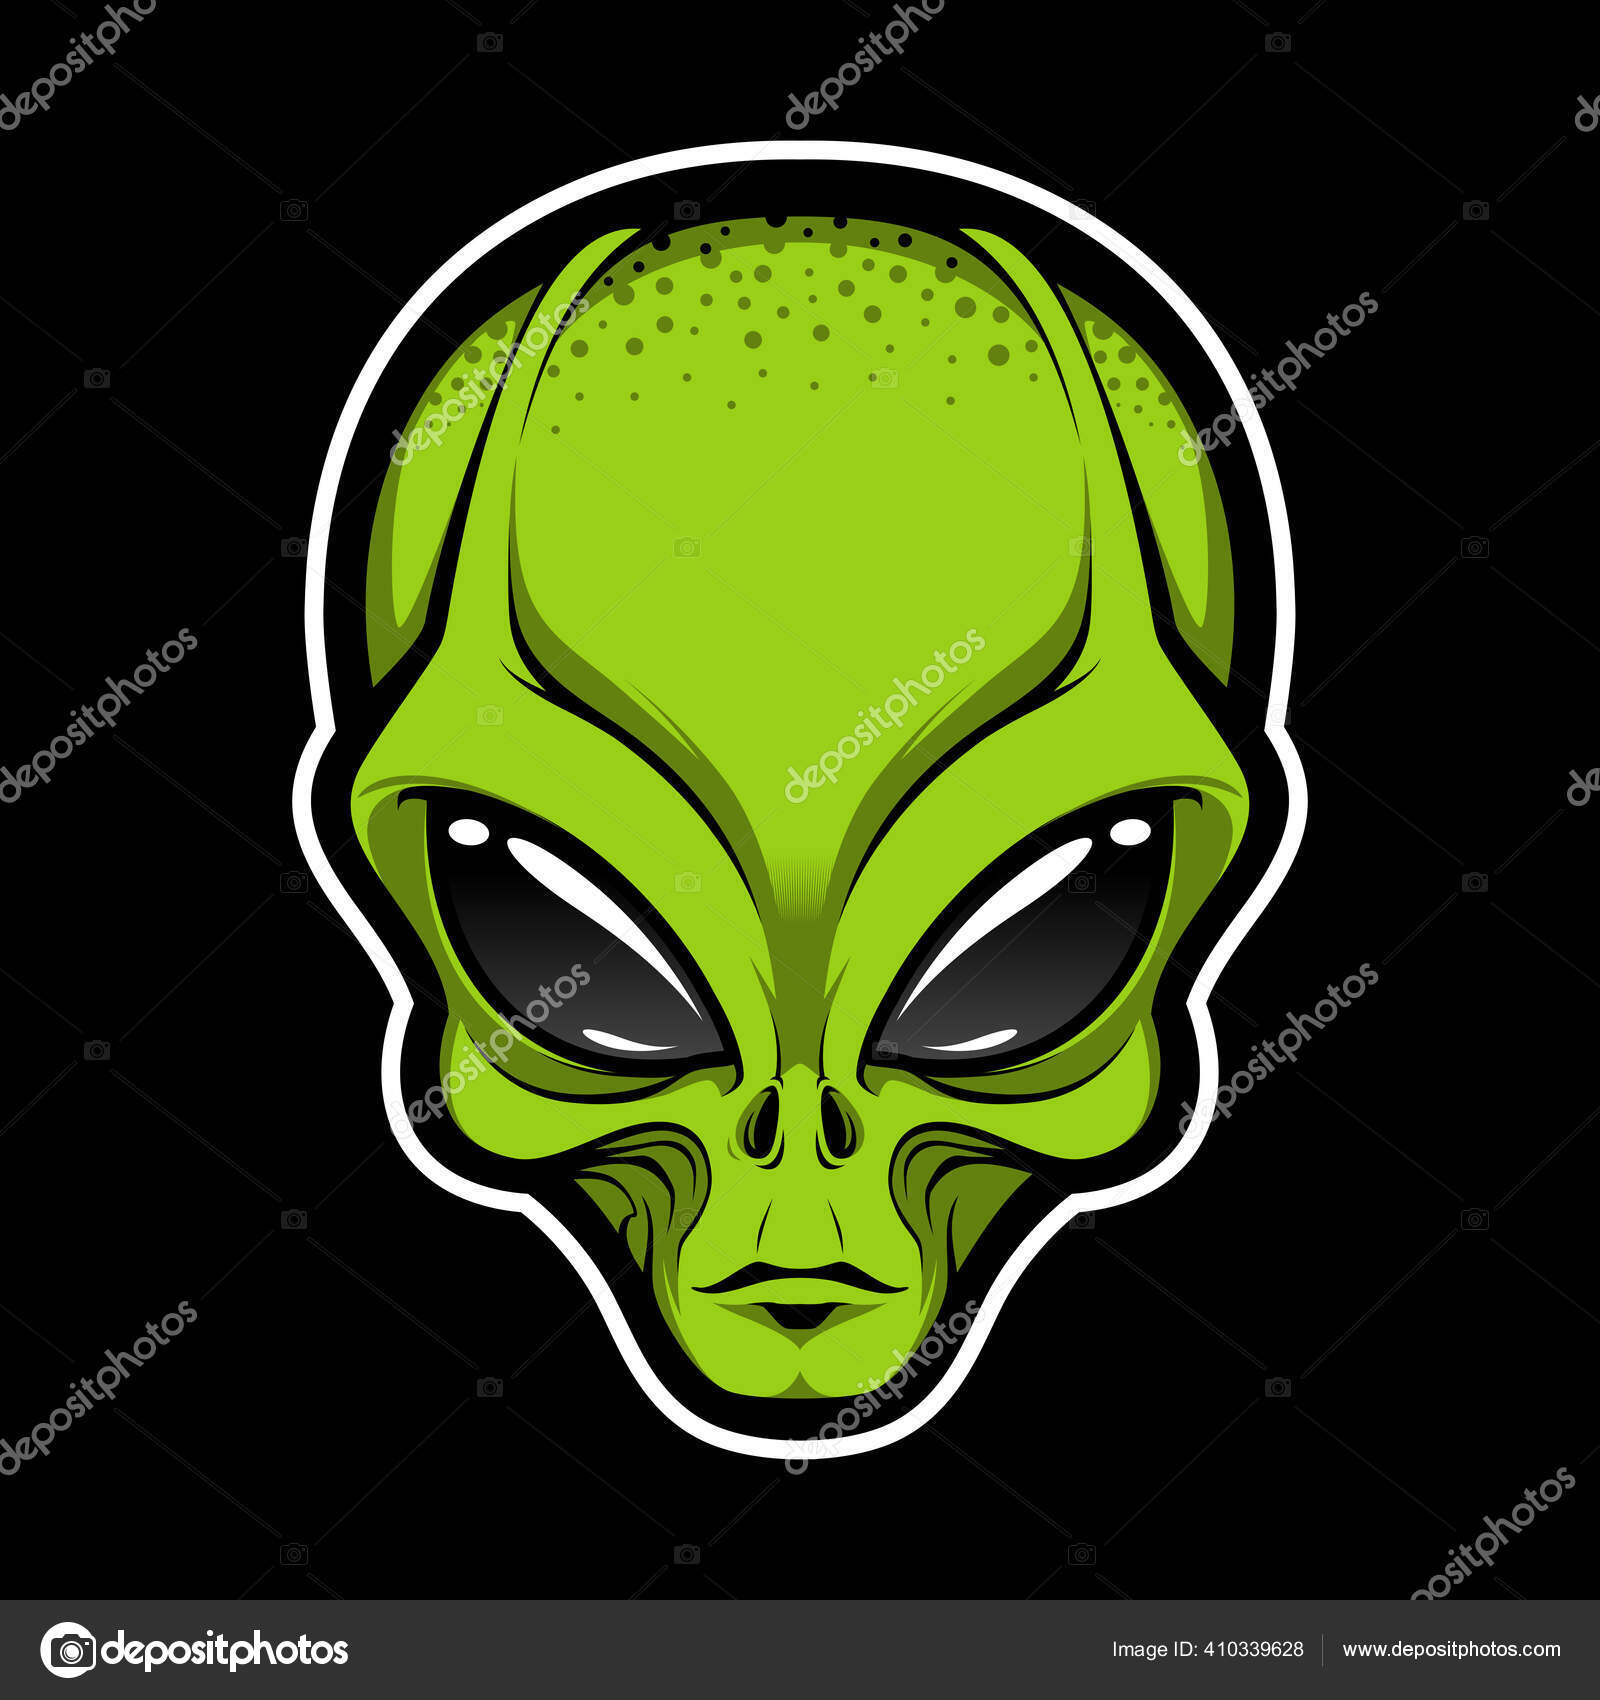 Cara de alien imágenes de stock de arte vectorial | Depositphotos